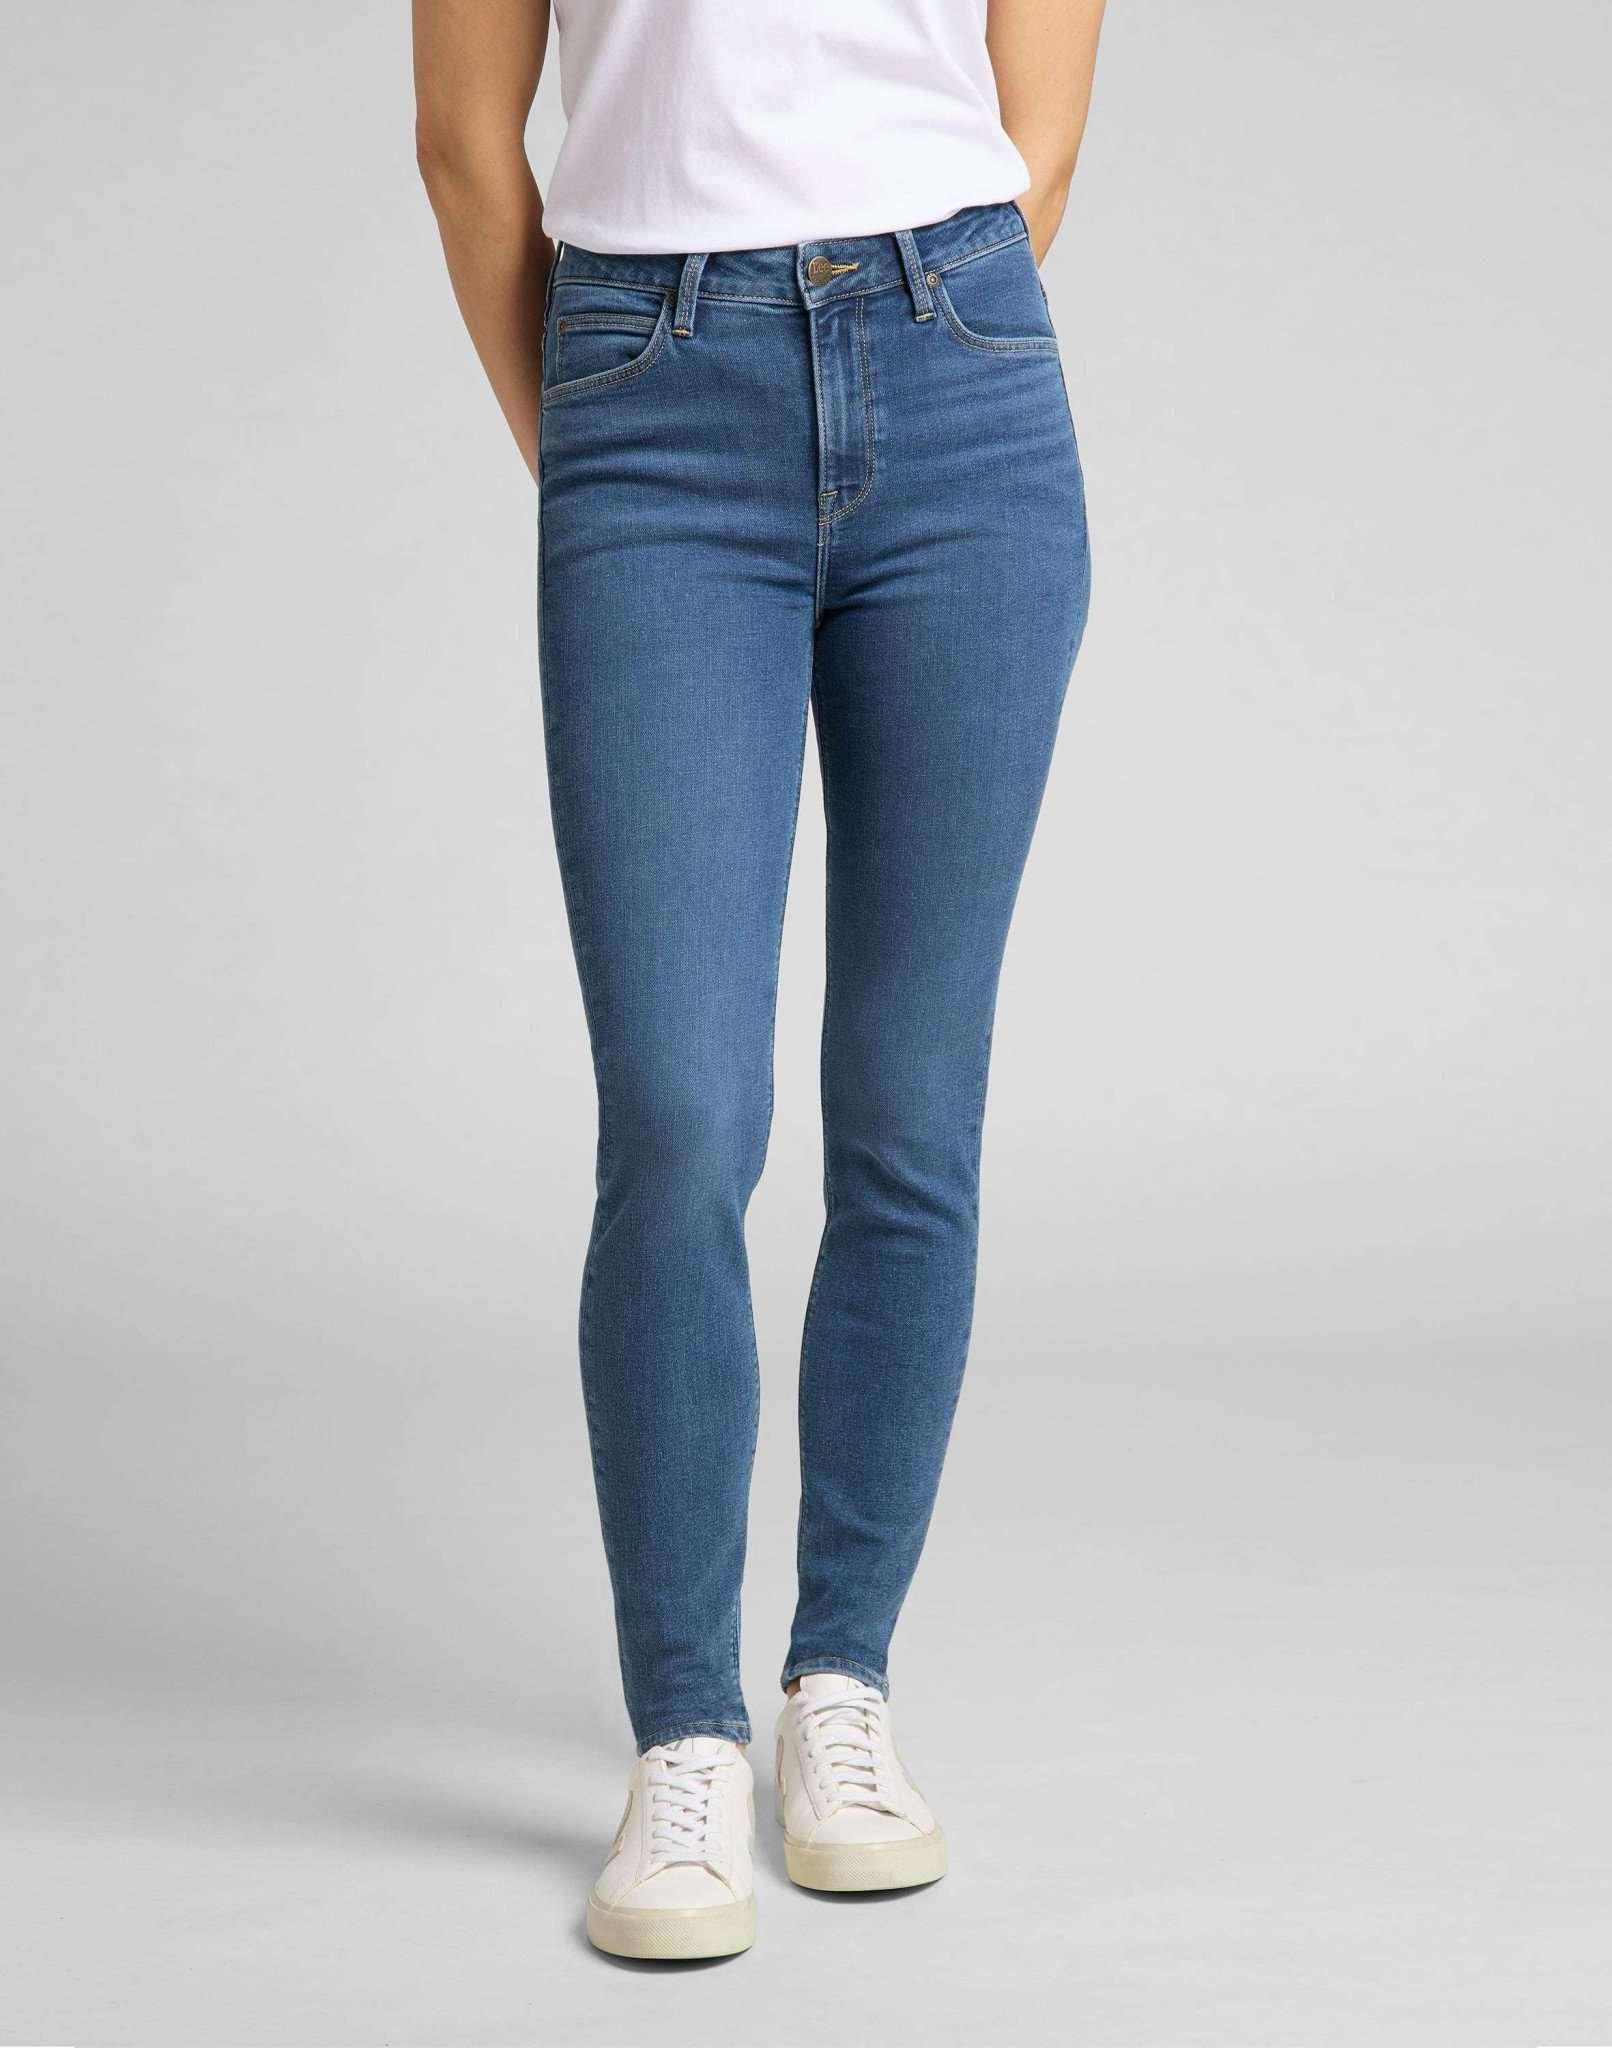 Jeans Skinny Fit Scarlett High Damen Blau Denim L33/W27 von Lee